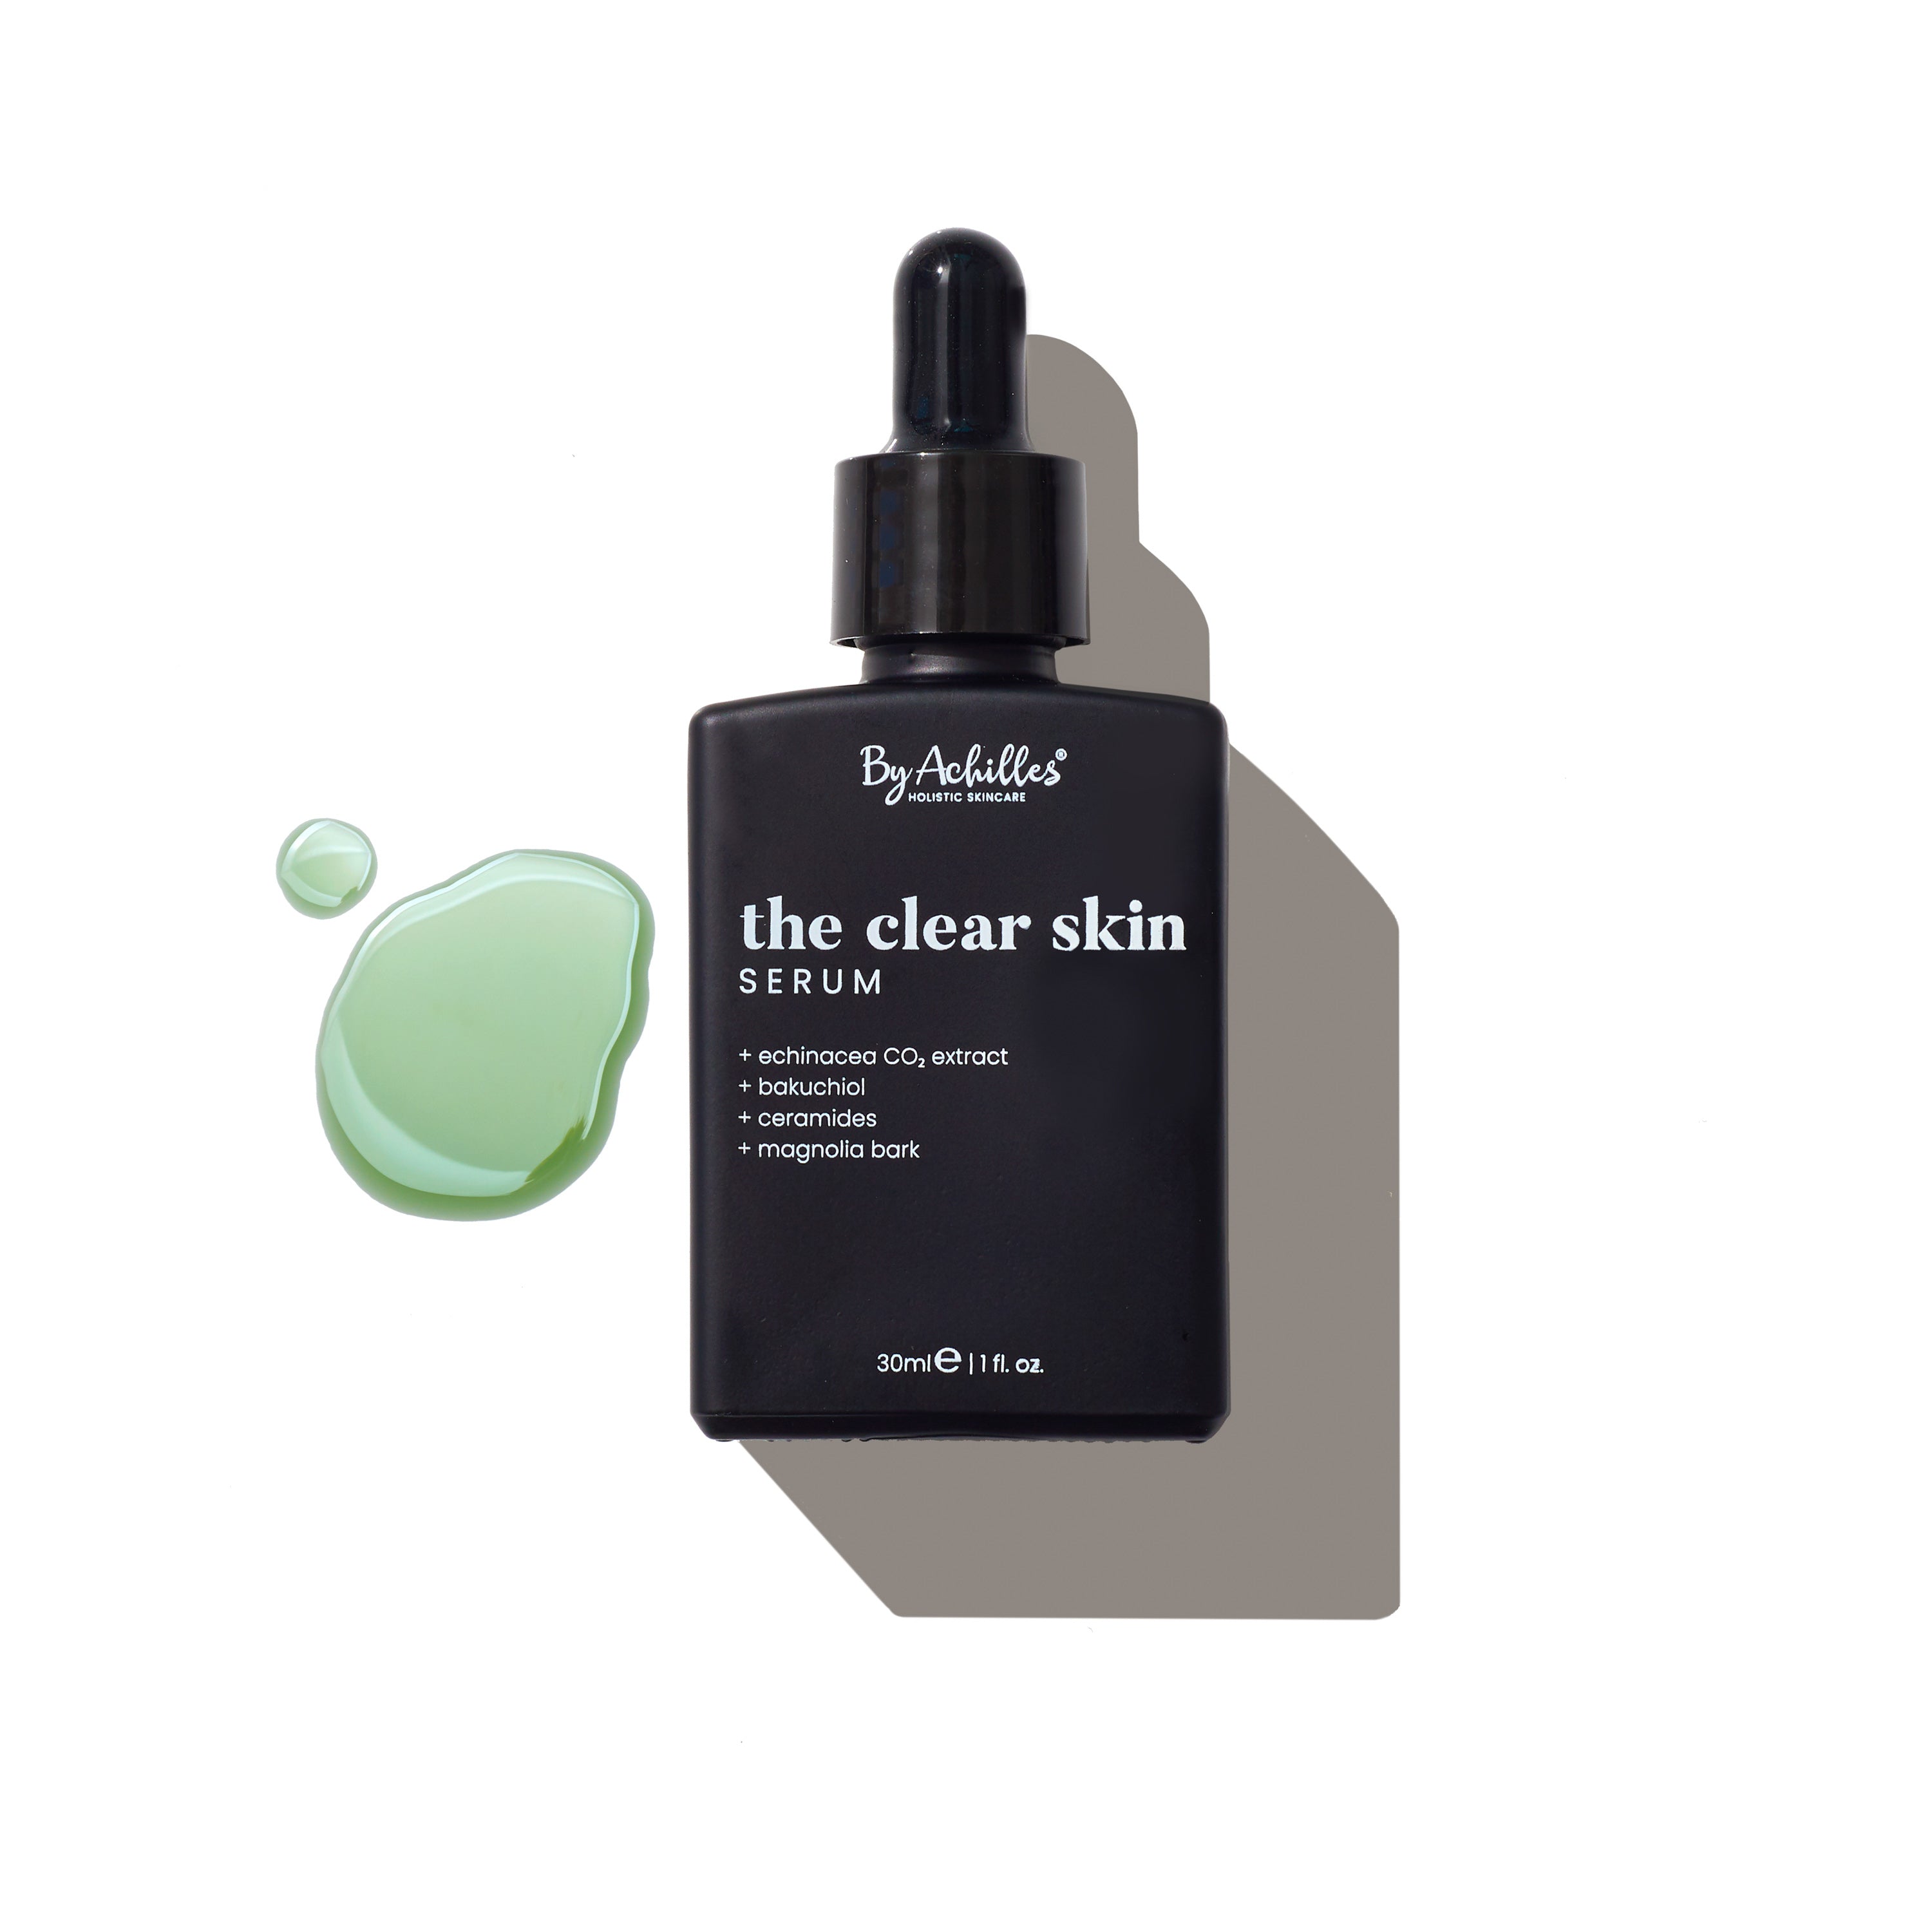 the clear skin serum